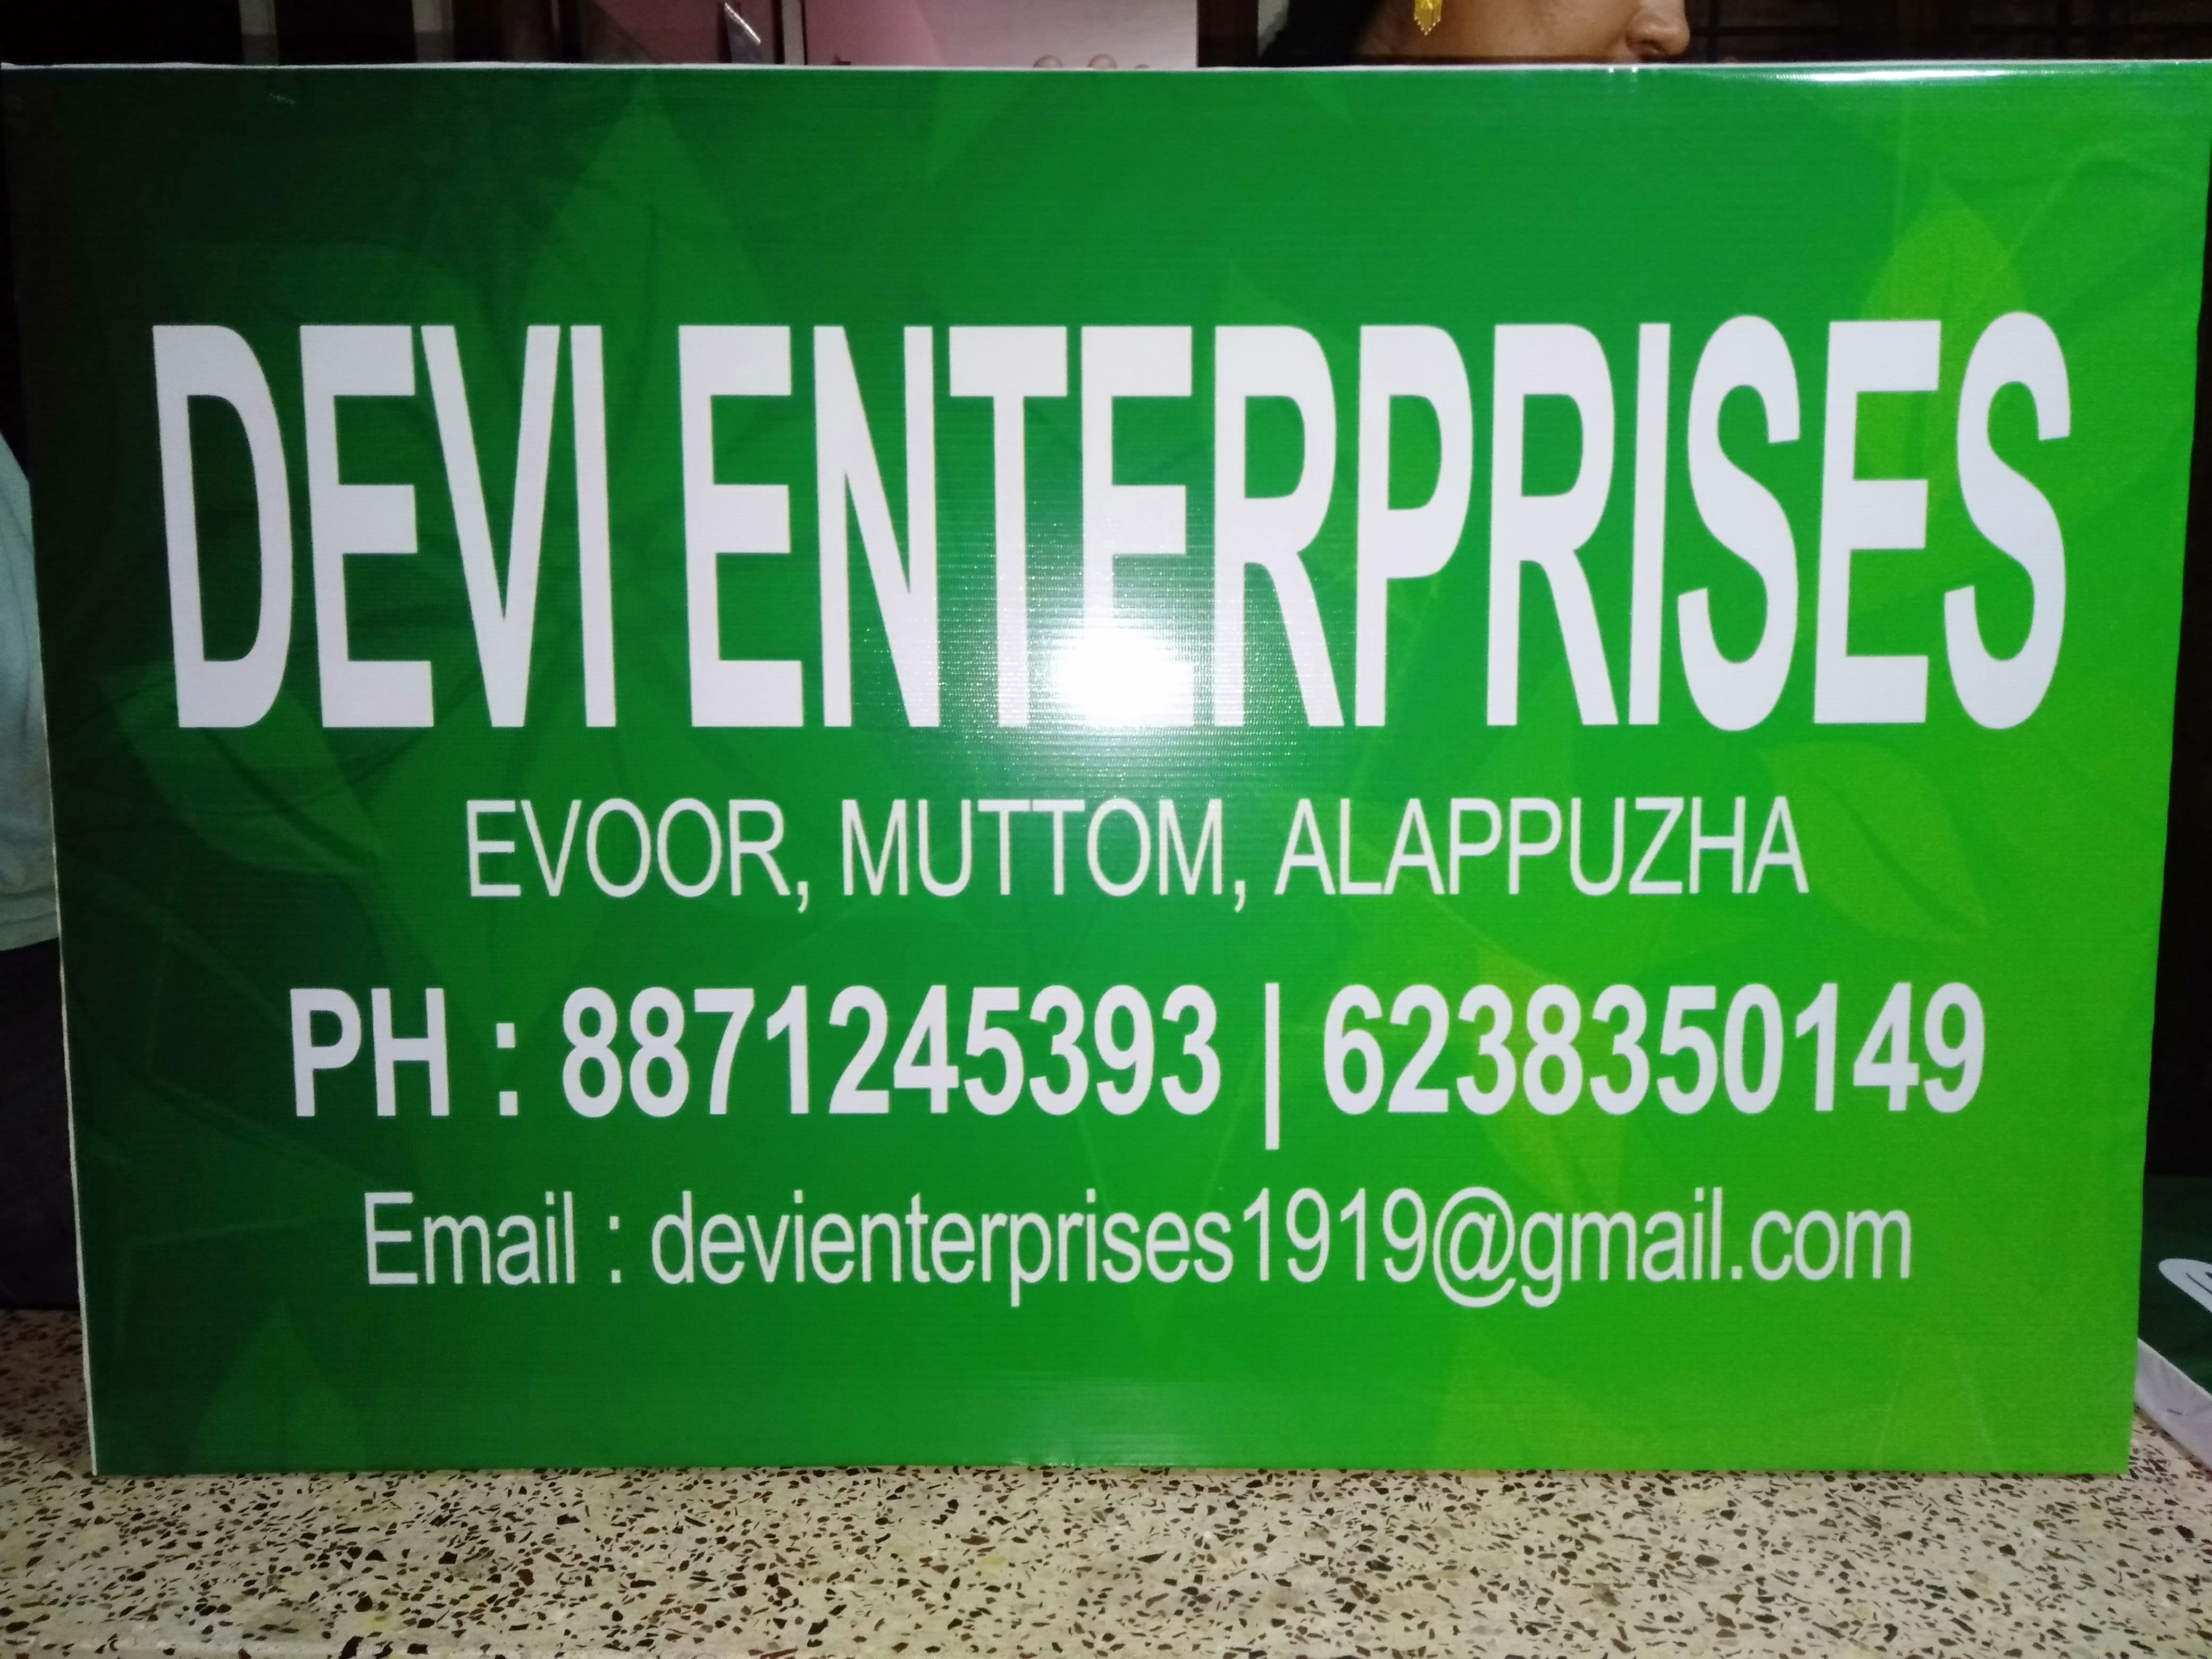 Devi enterprises